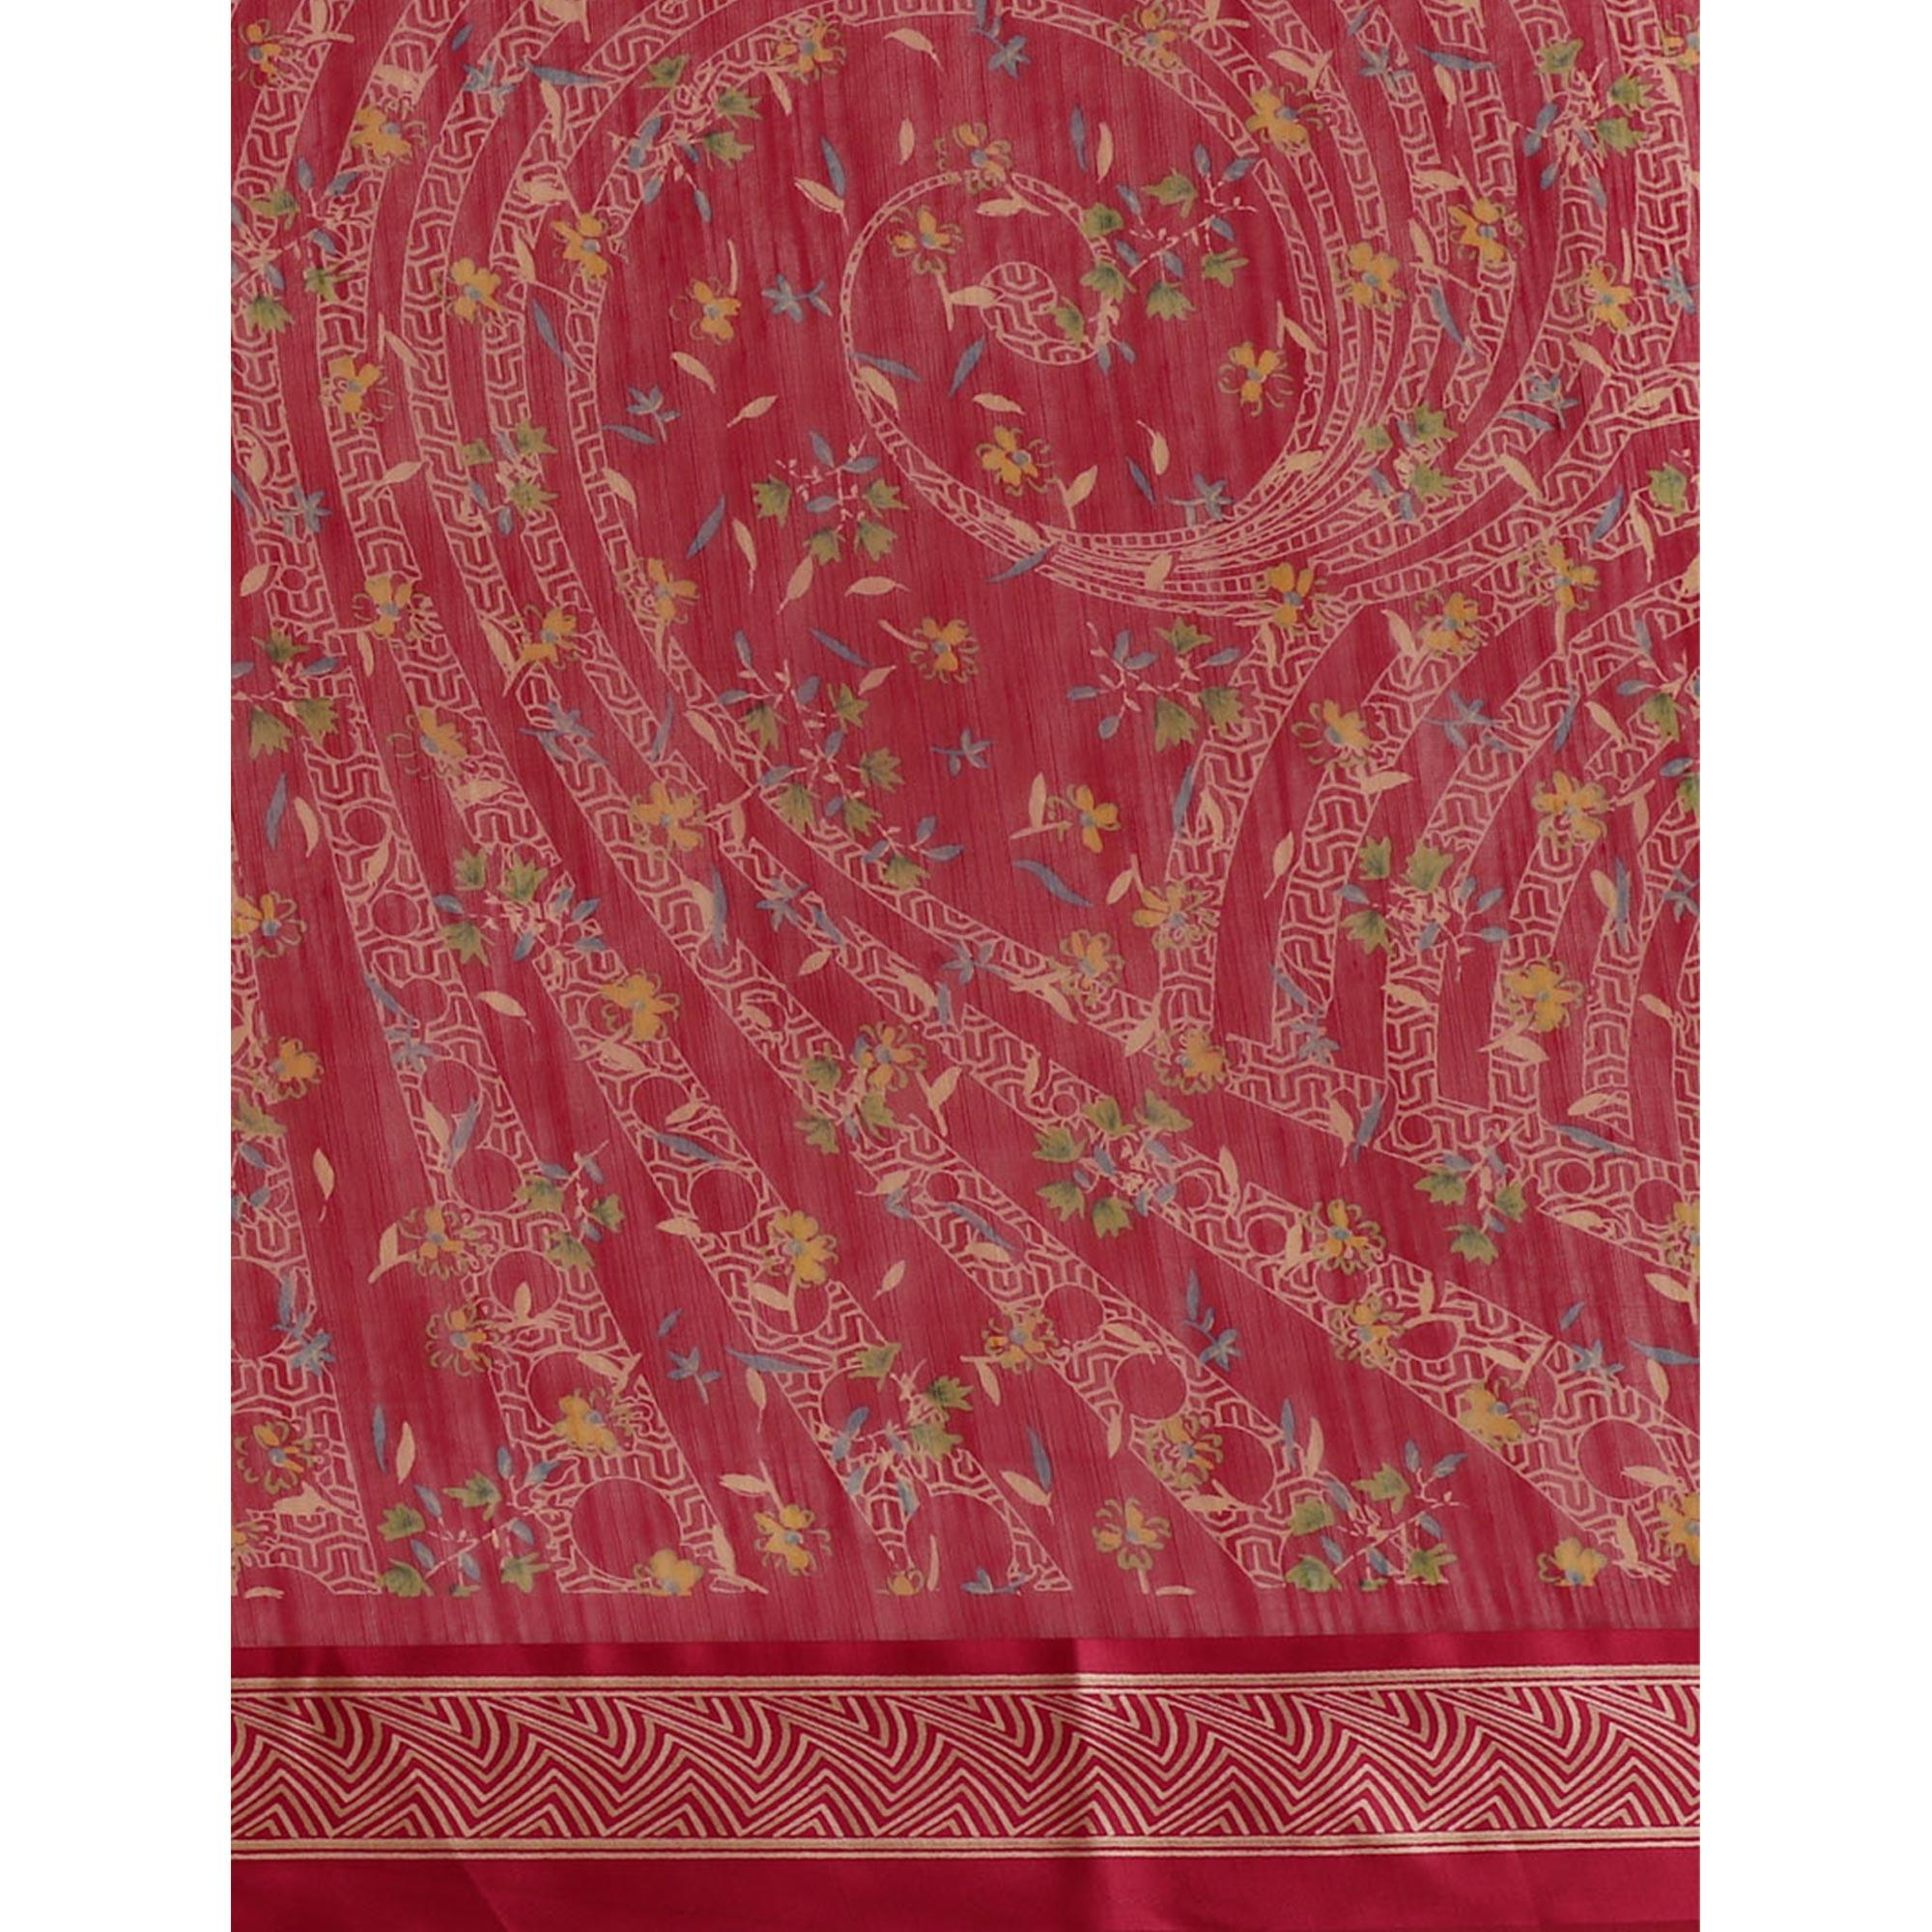 Delightful Red Colored Casual Wear Floral Printed Cotton Silk Saree - Peachmode